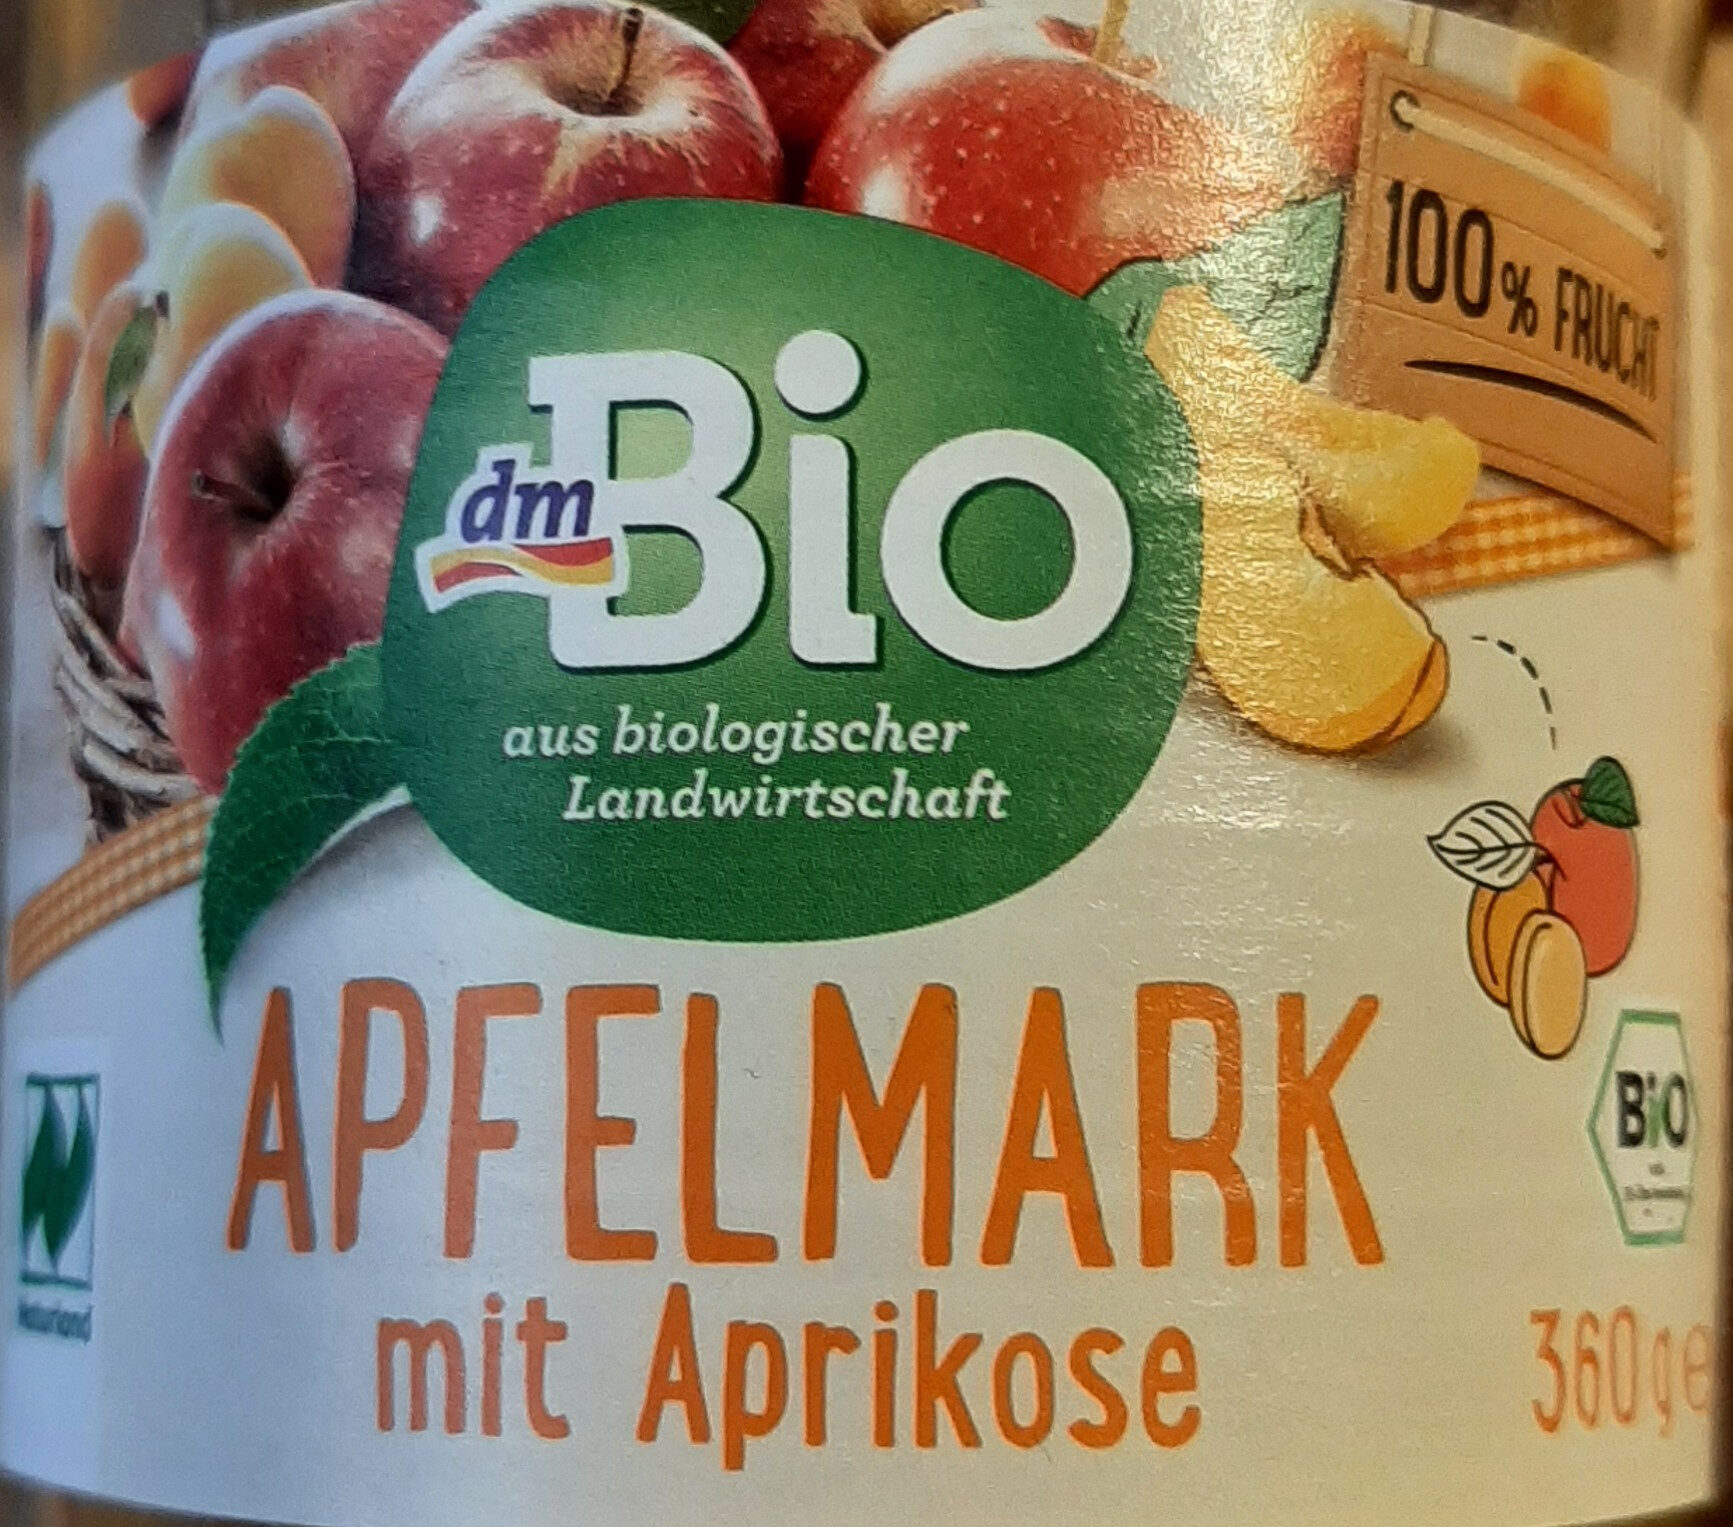 Apfelmark mit Aprikose - Product - de